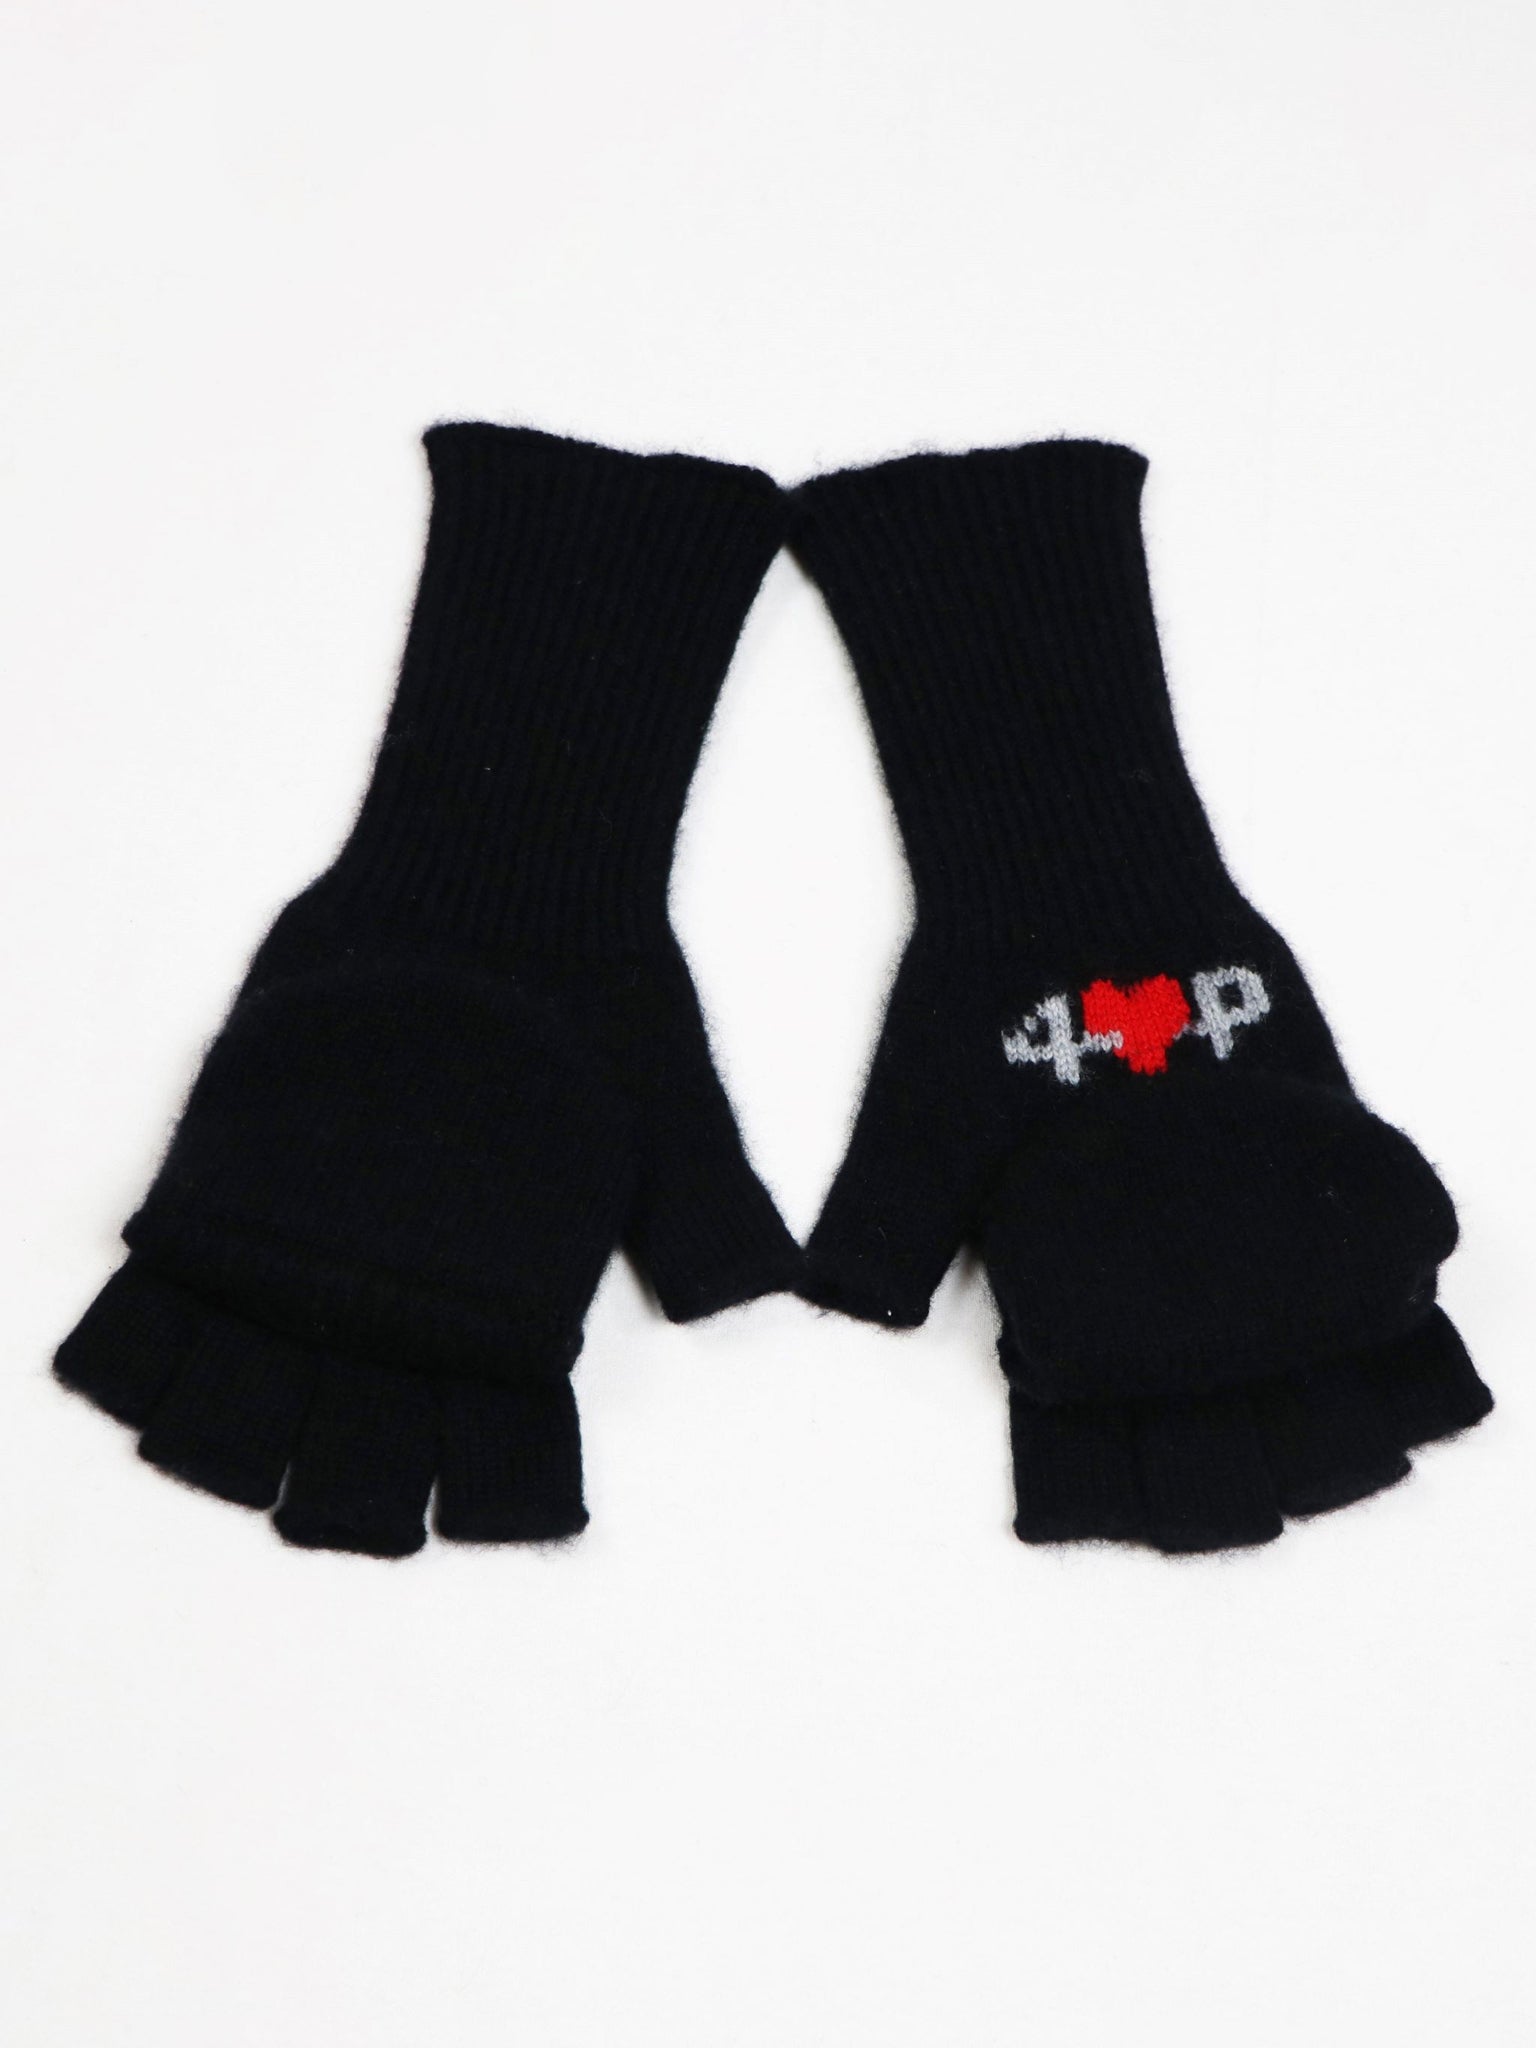 Fingerless Gloves/Mittens in Cashmere